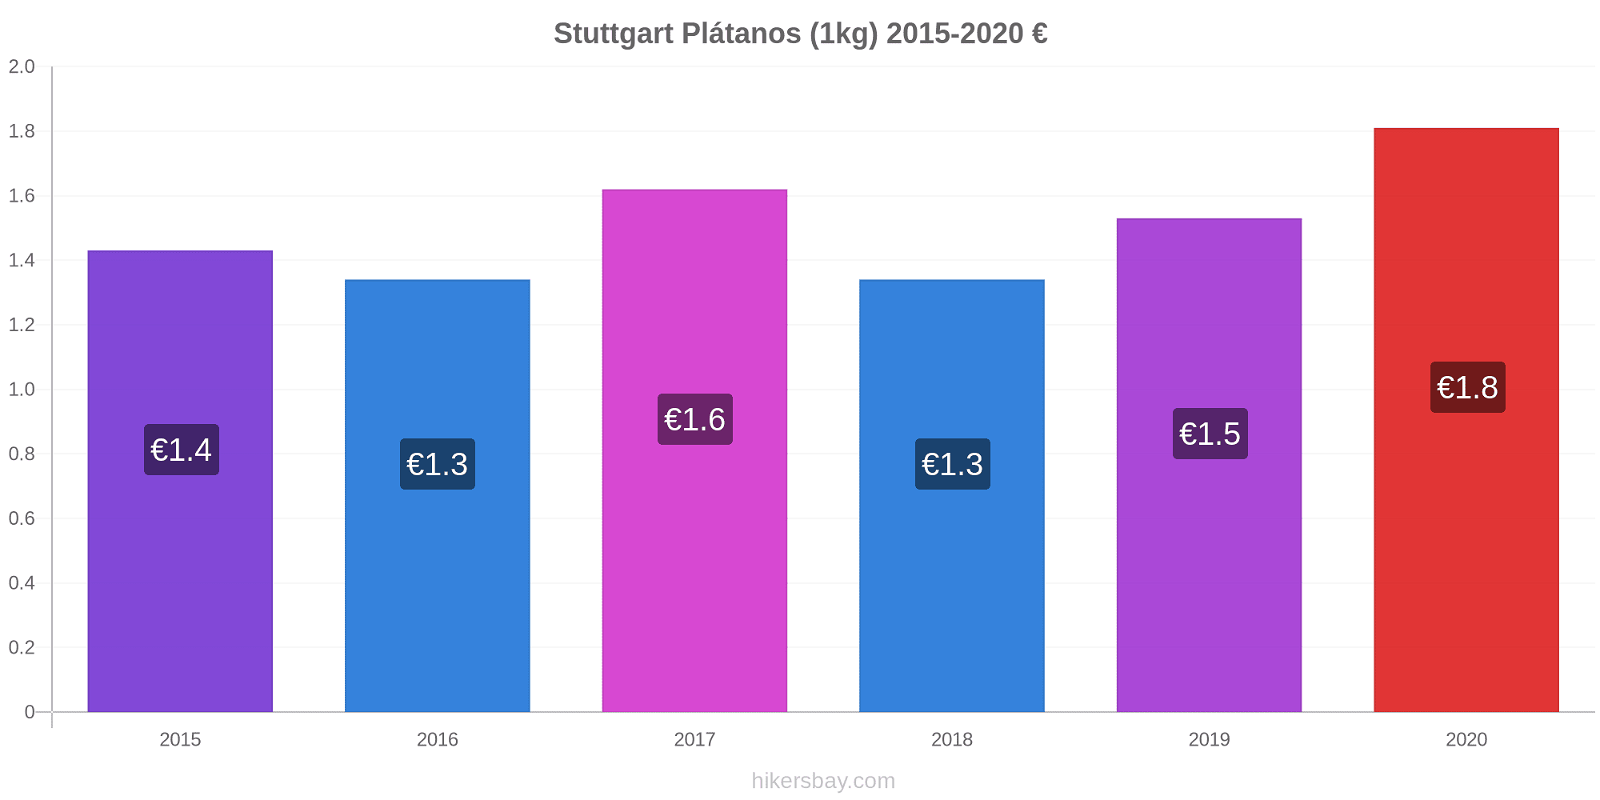 Stuttgart cambios de precios Plátano (1kg) hikersbay.com